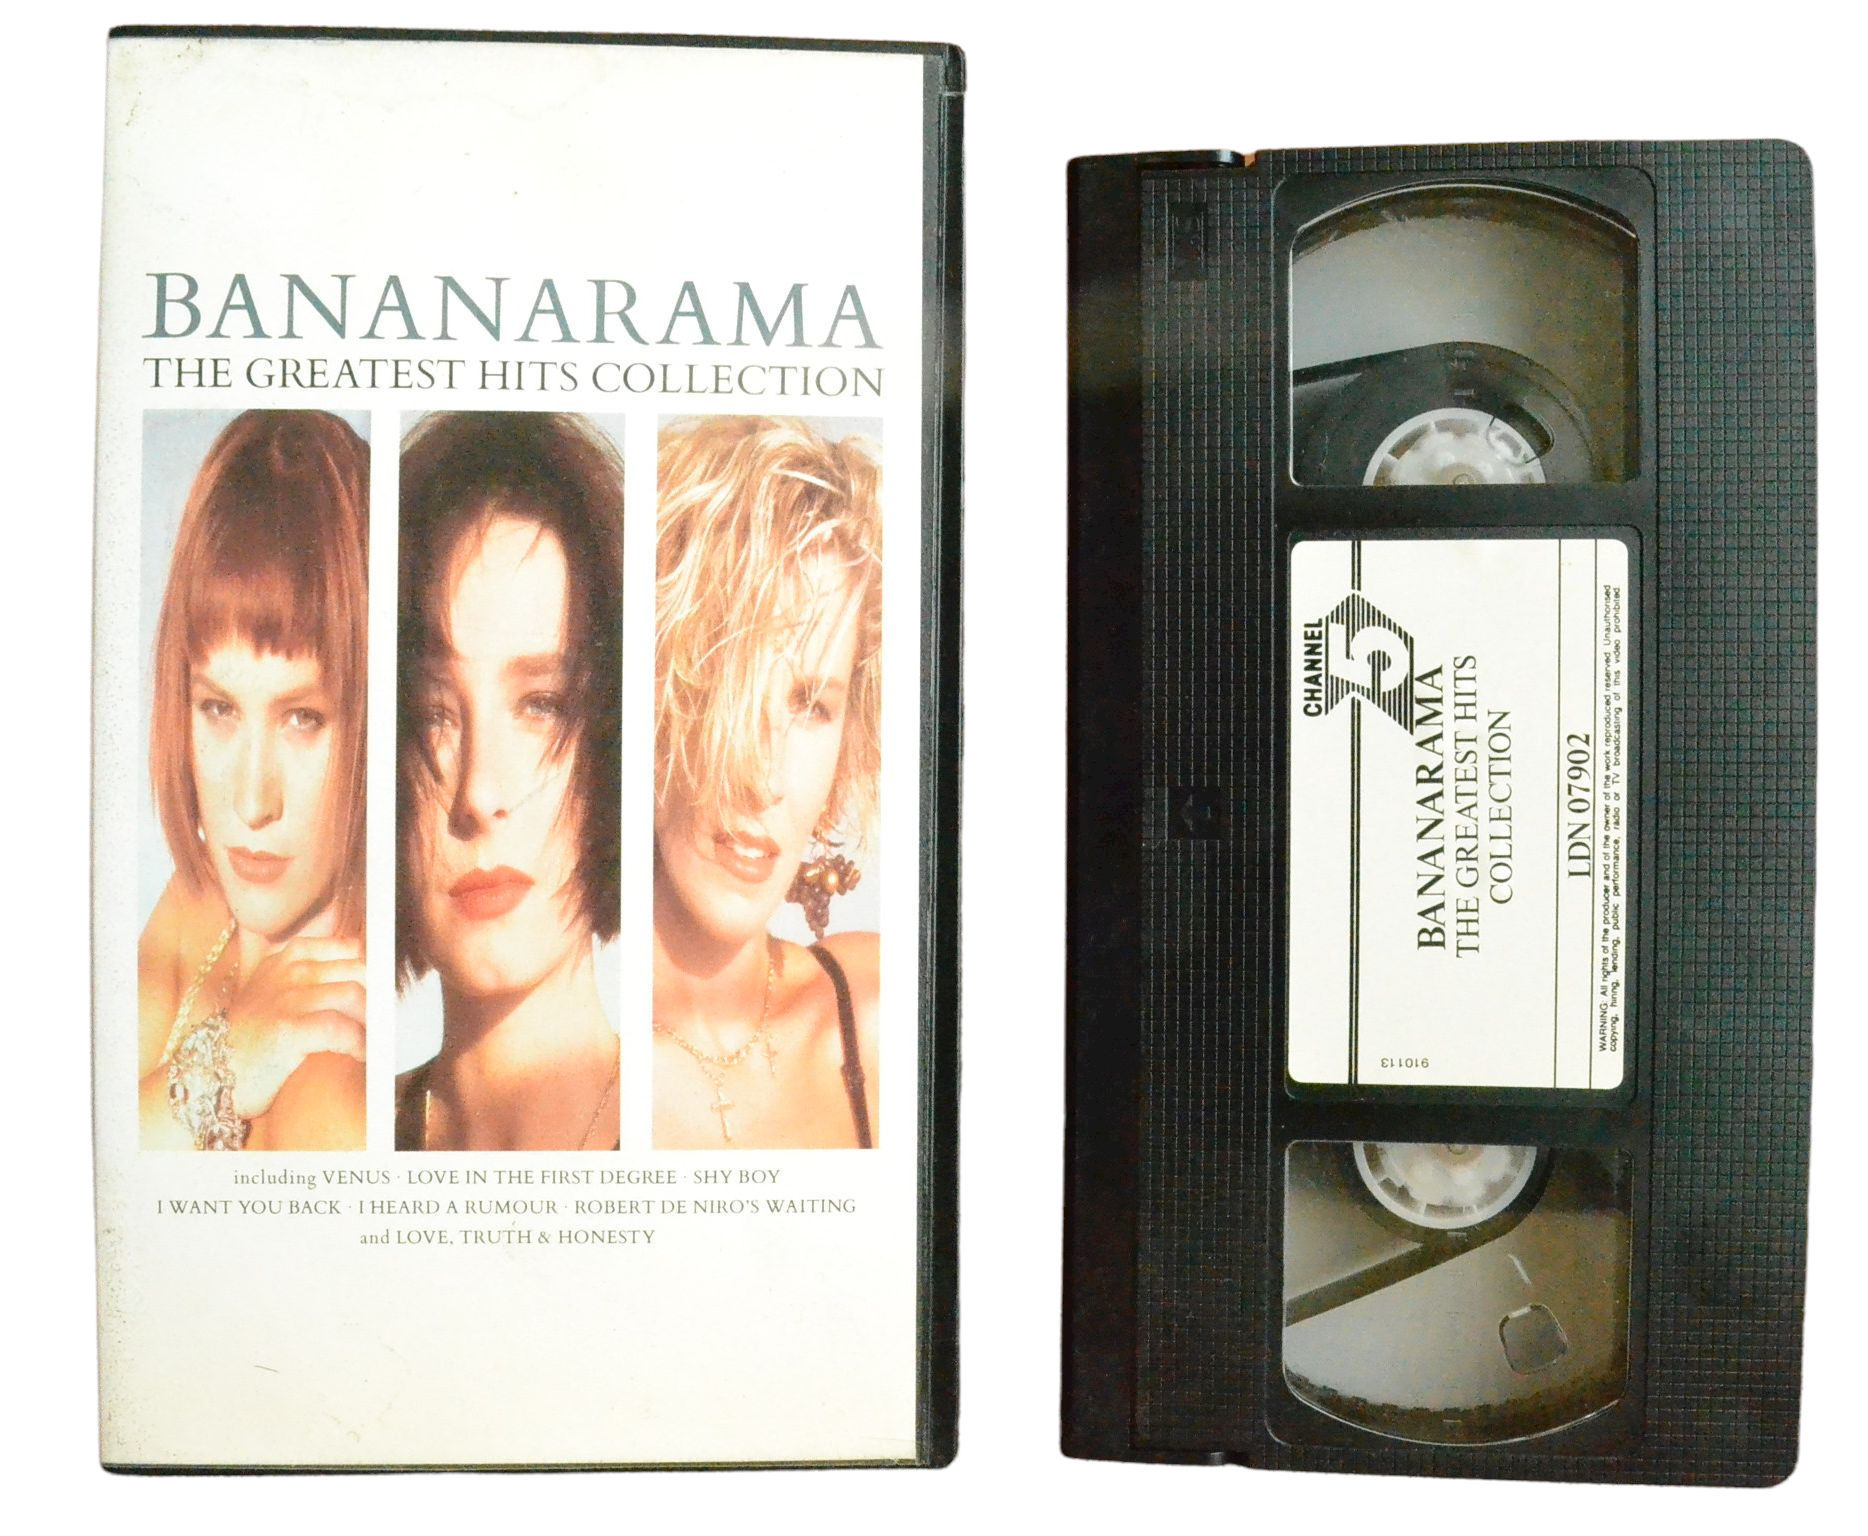 Bananarama The Greatest Hits Collection - Bananarama - Channel 5 - Music - Pal VHS-